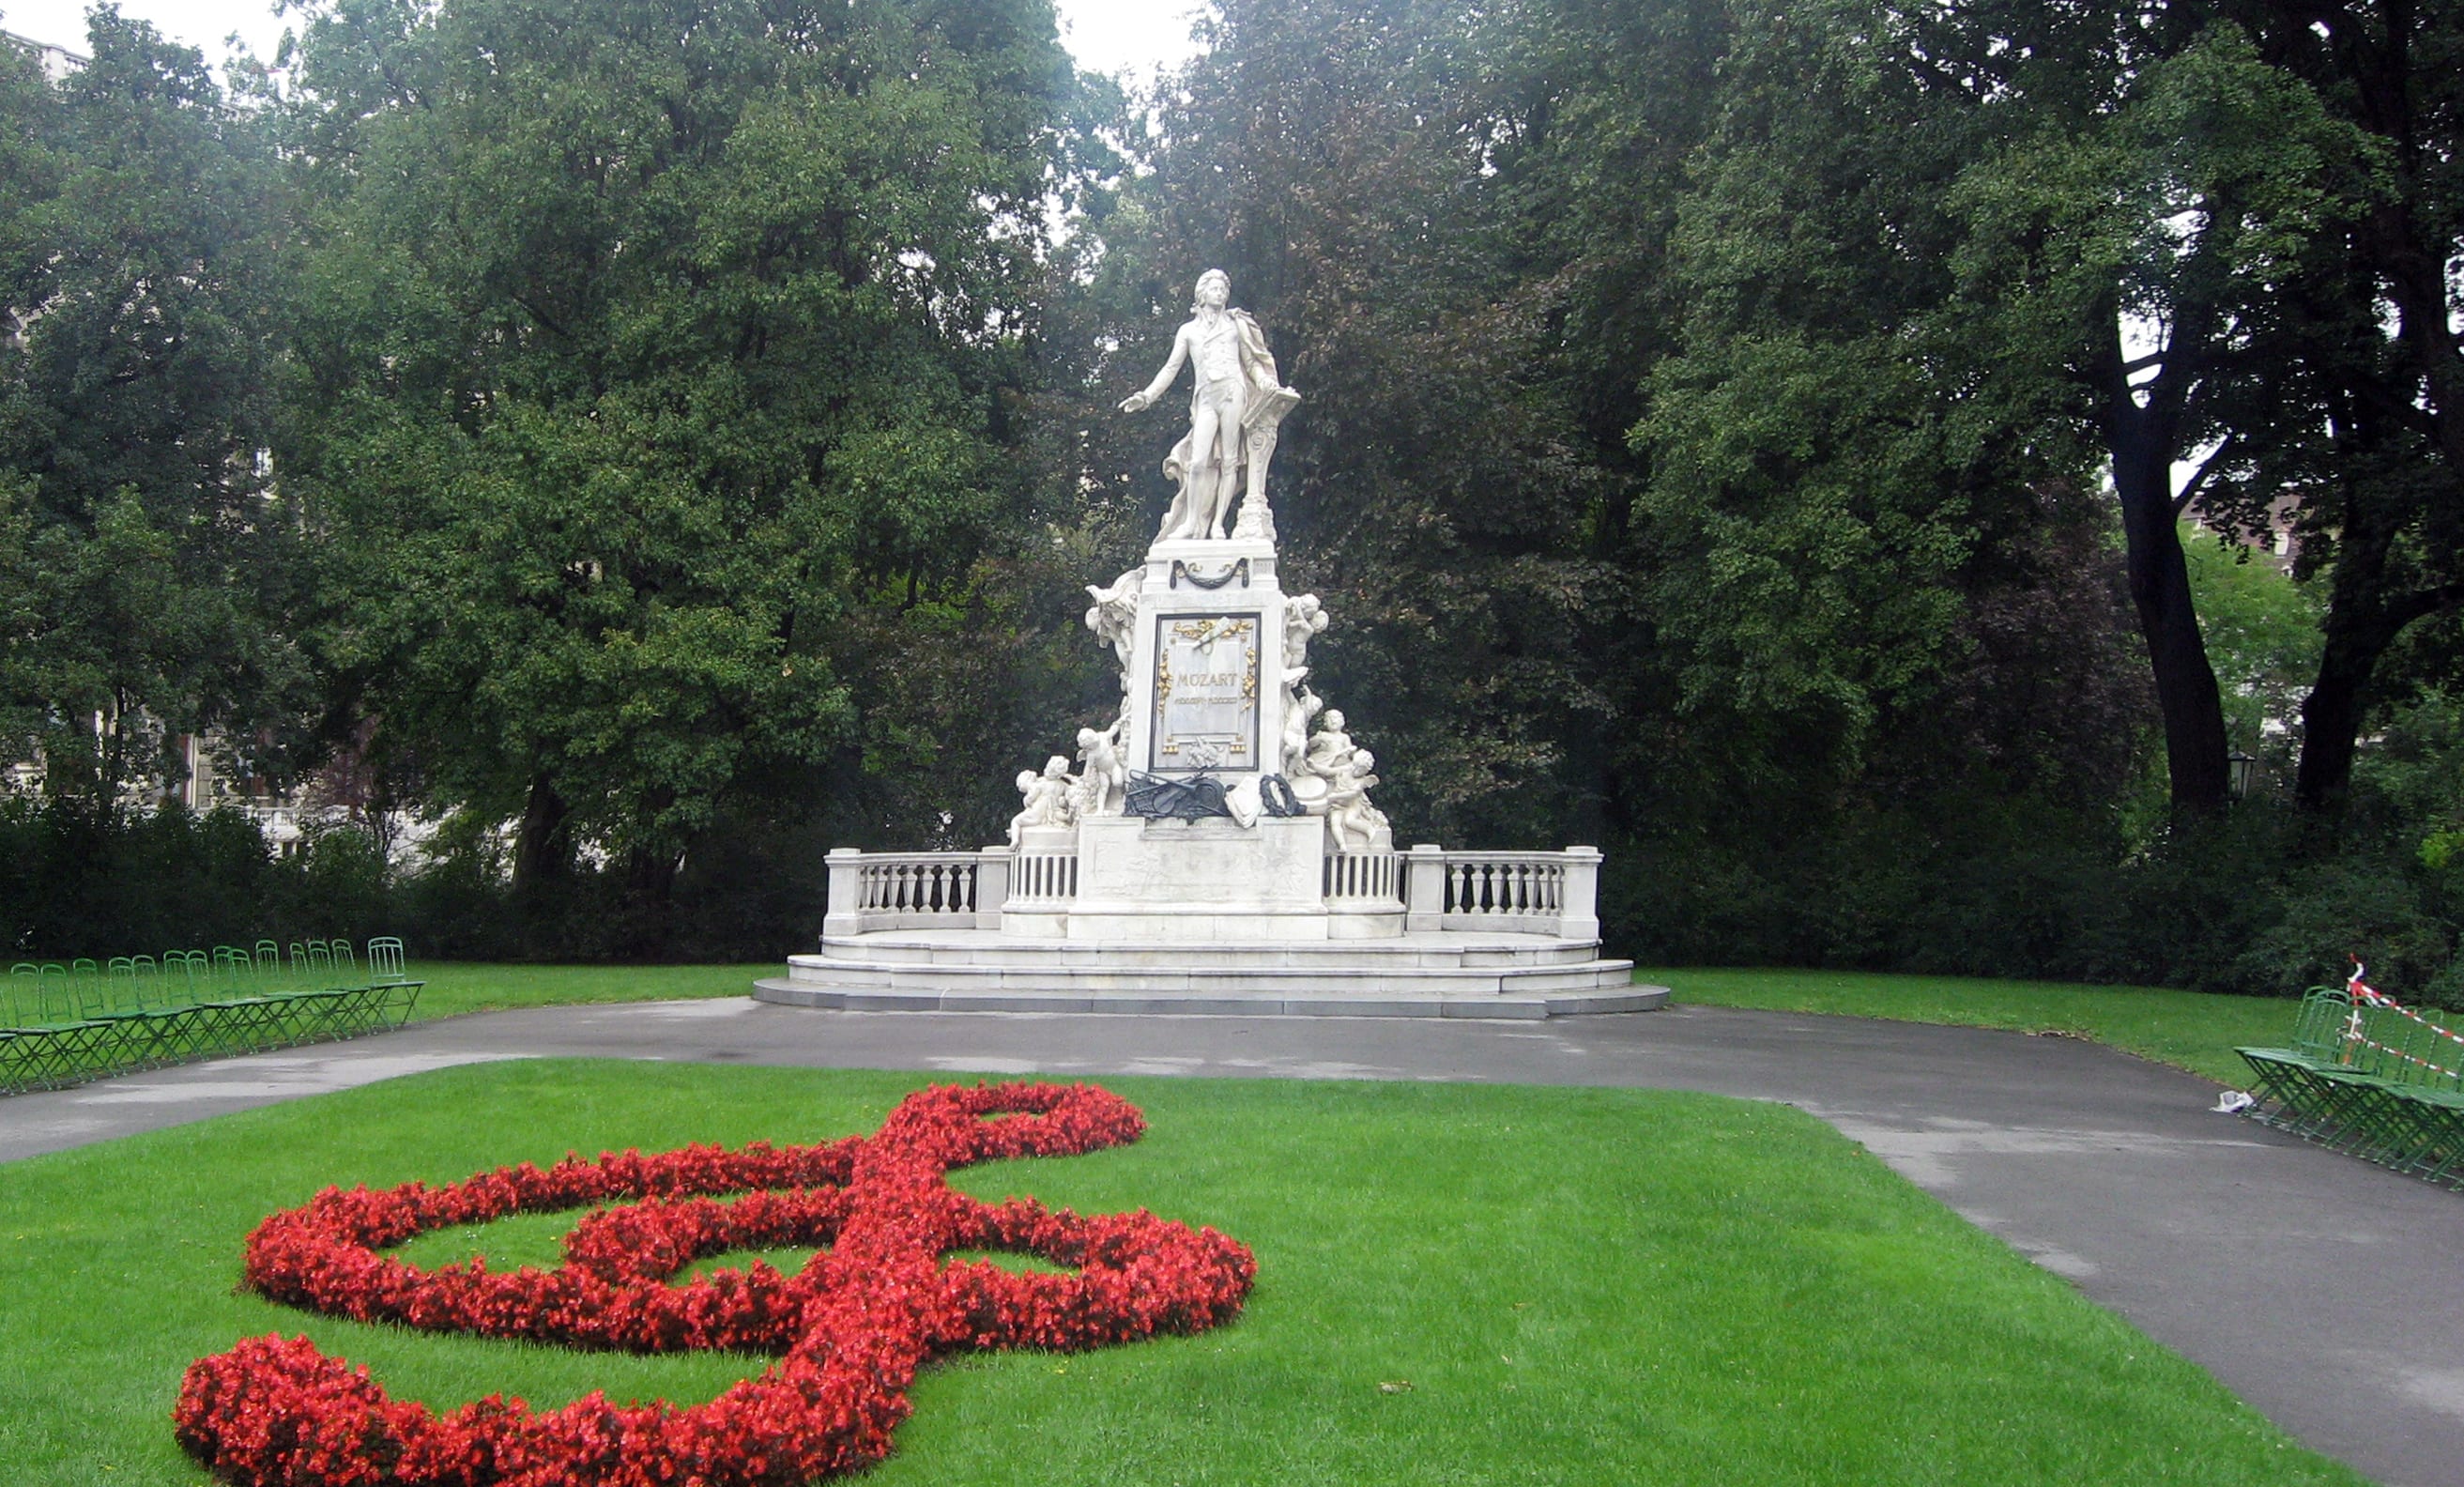 The Mozart memorial in Vienna